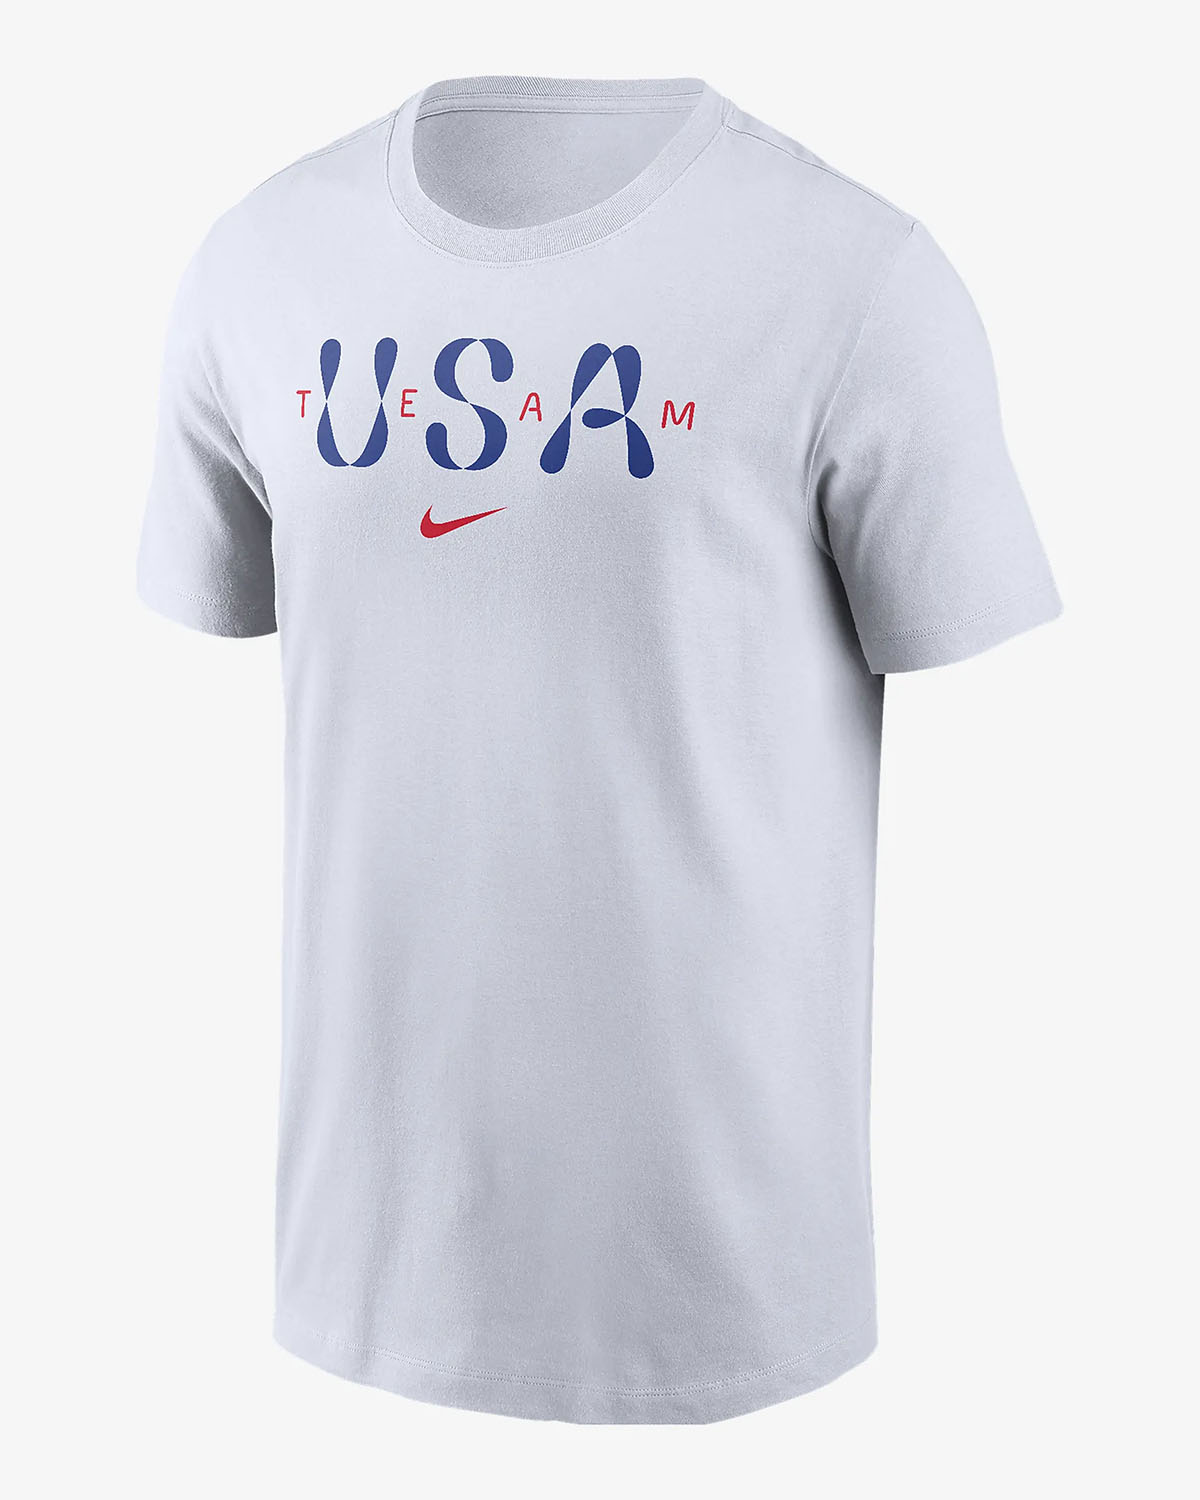 Nike Team USA T Shirt White